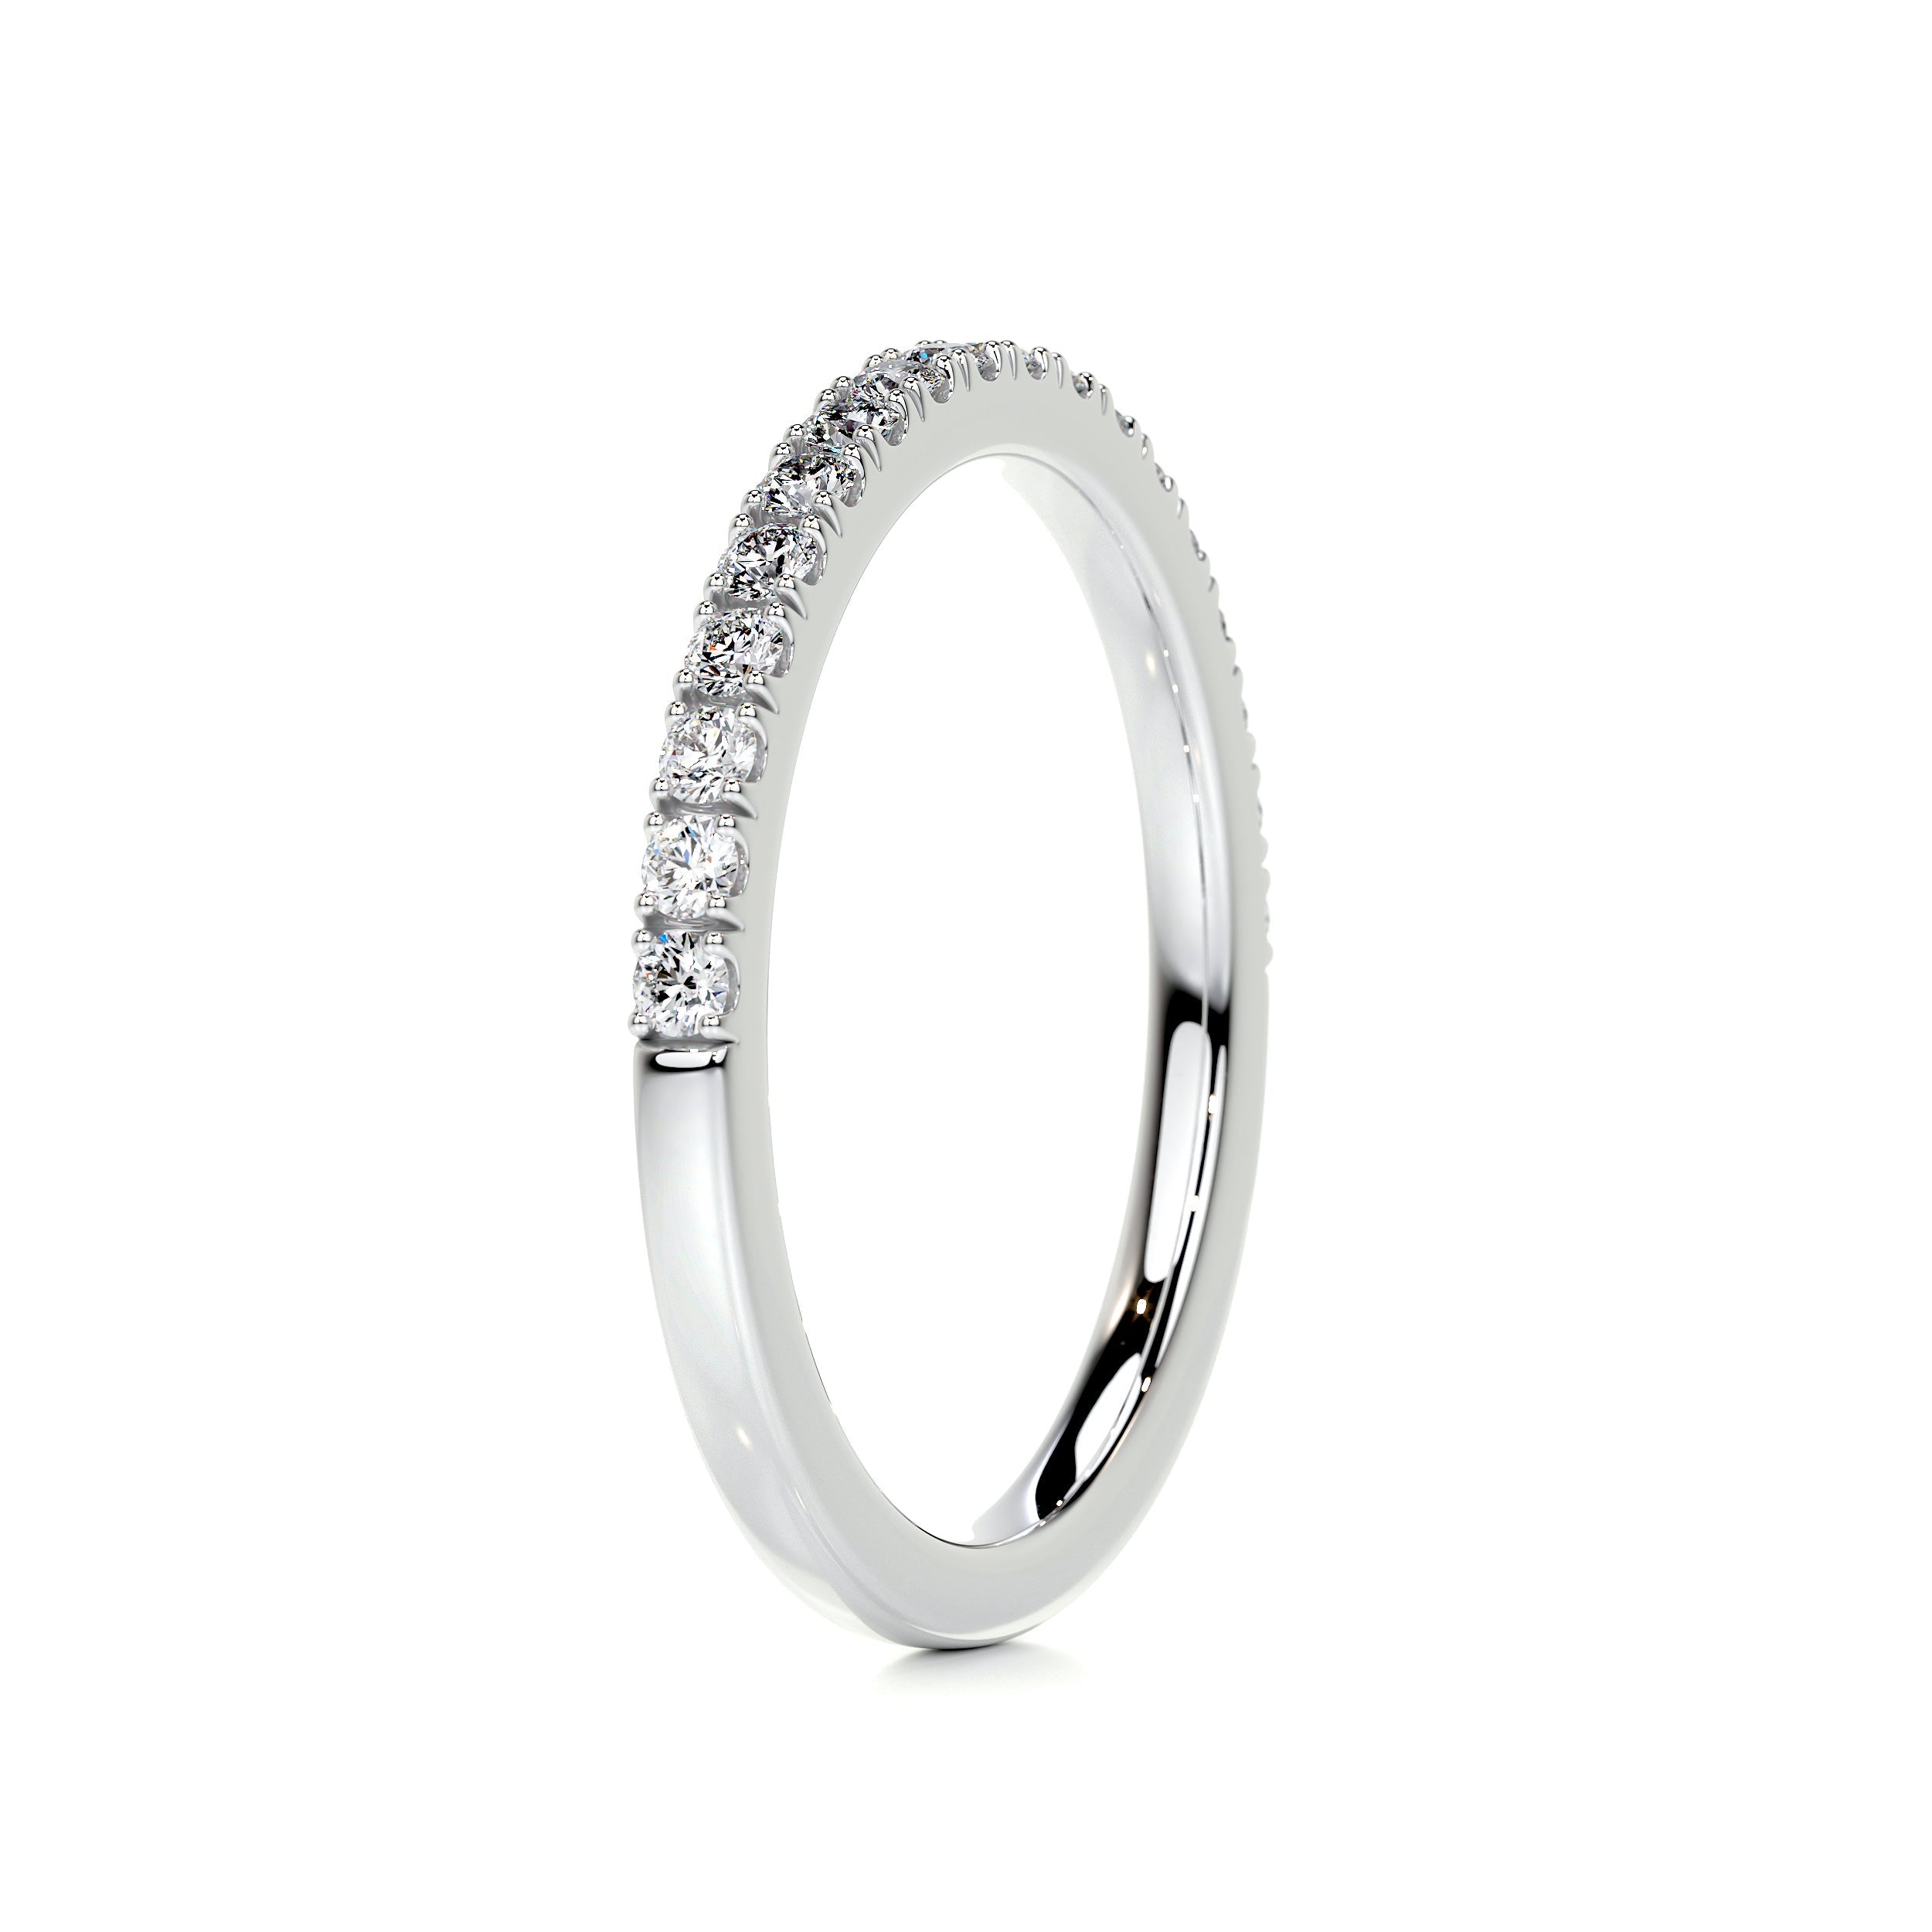 Stephanie Diamond Wedding Ring   (0.3 Carat) - 18K White Gold (RTS)